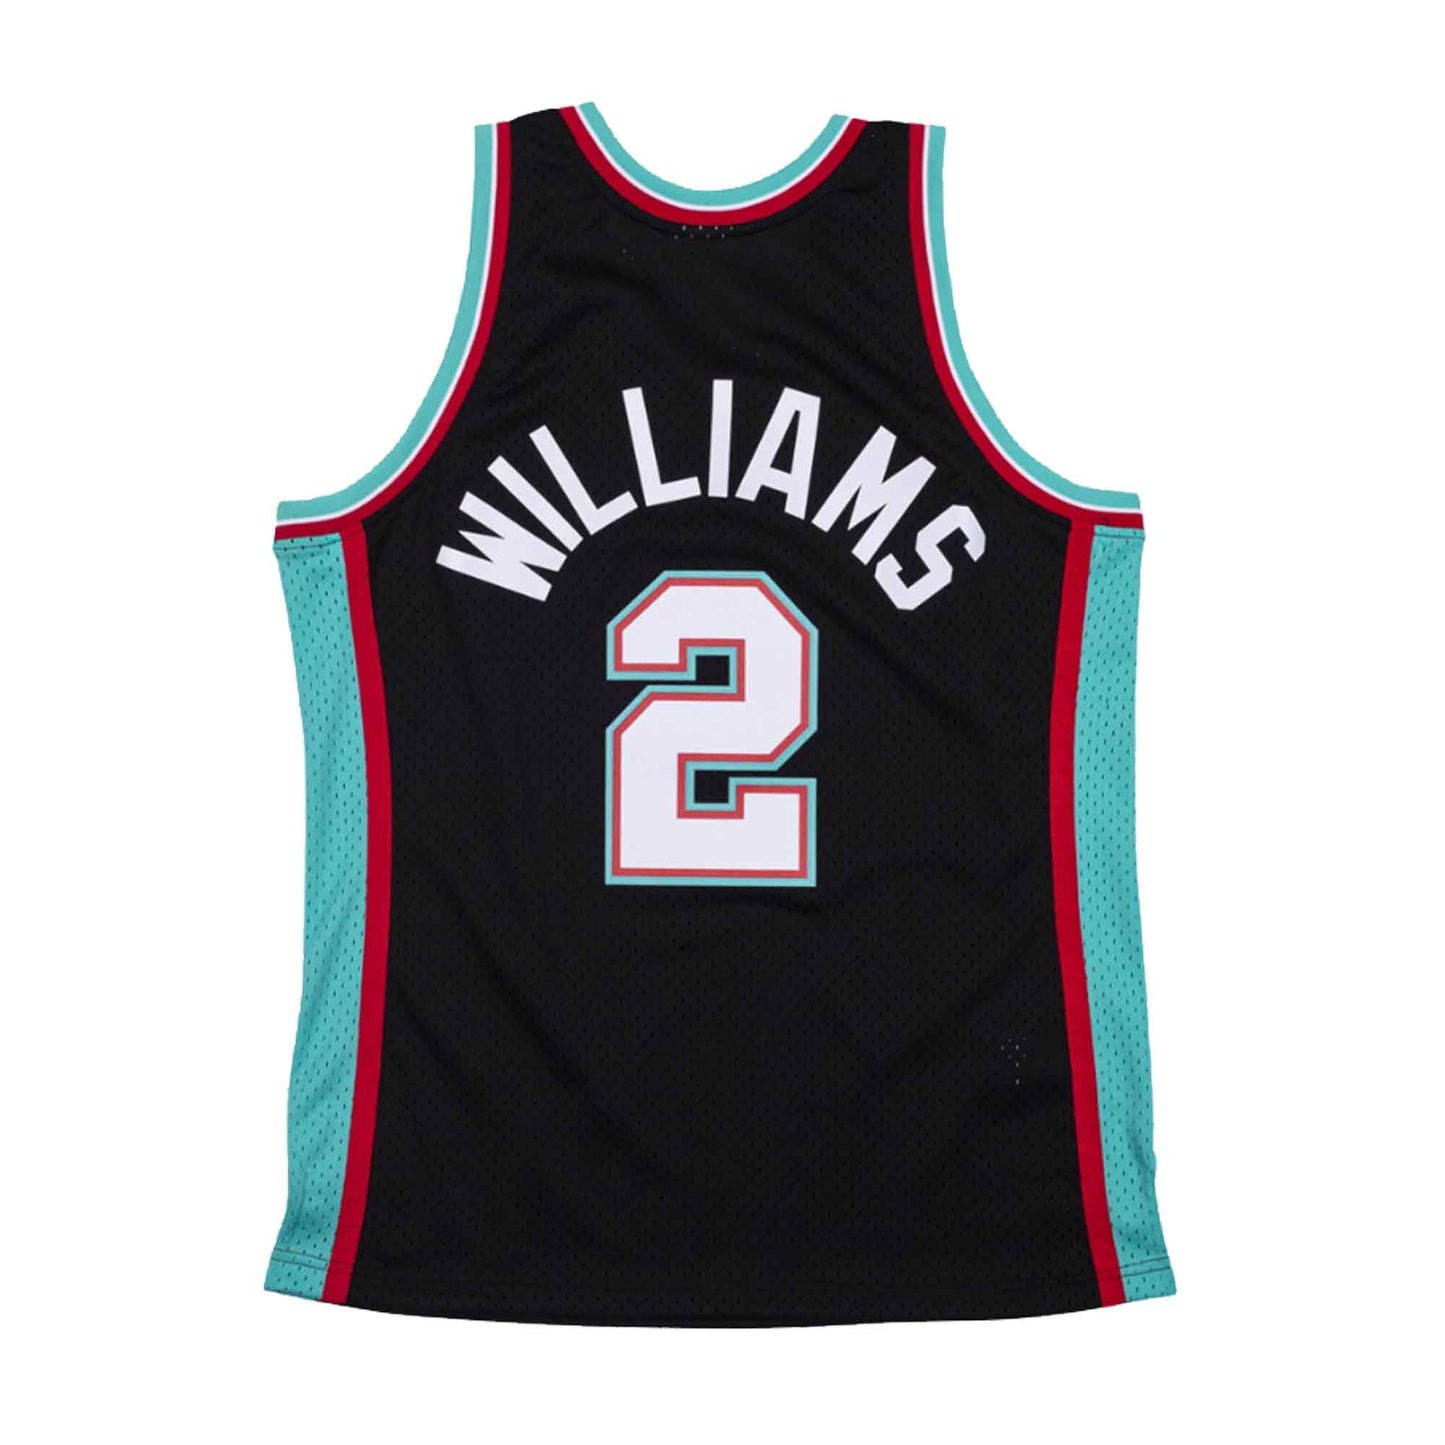 NBA Swingman Jersey Memphis Grizzlies 2001-02 Jason Williams #2